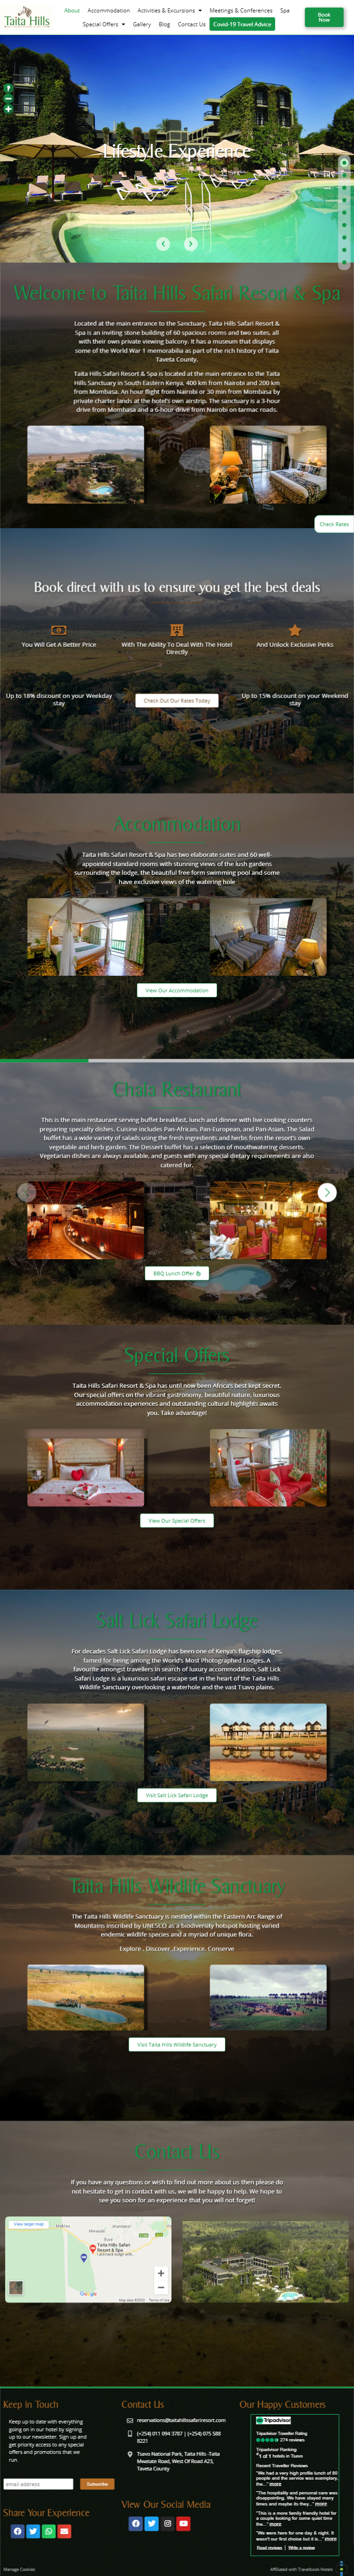 Tablet design for Taita Hills Safari Resort